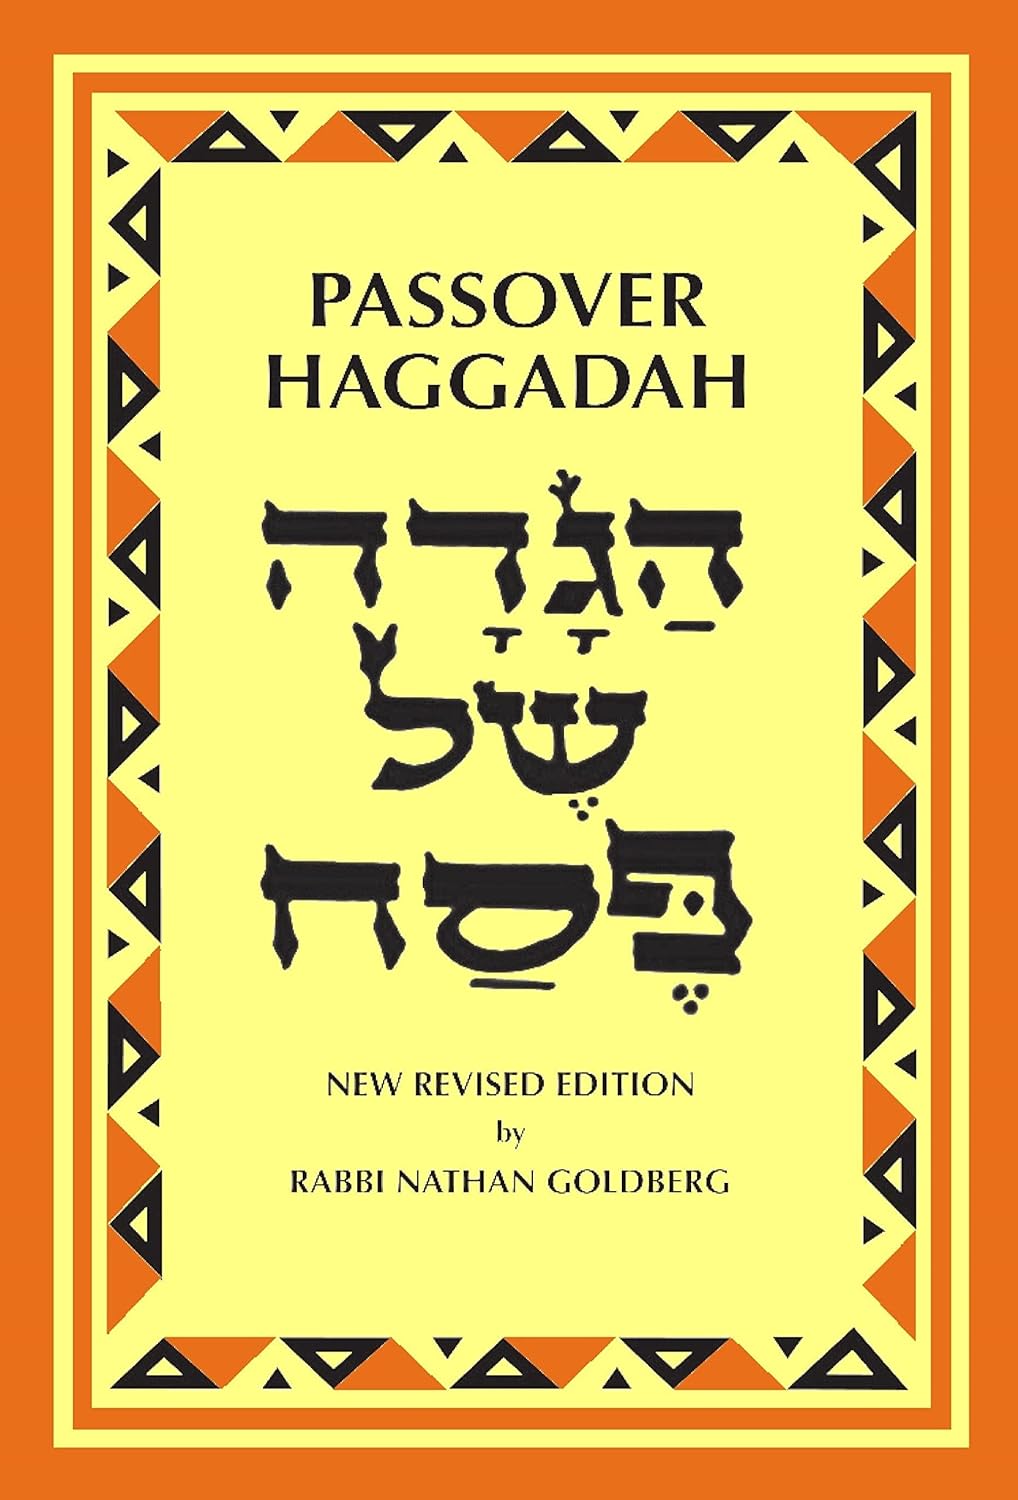 Best Jewish Books - Pesach Psssover Haggadah